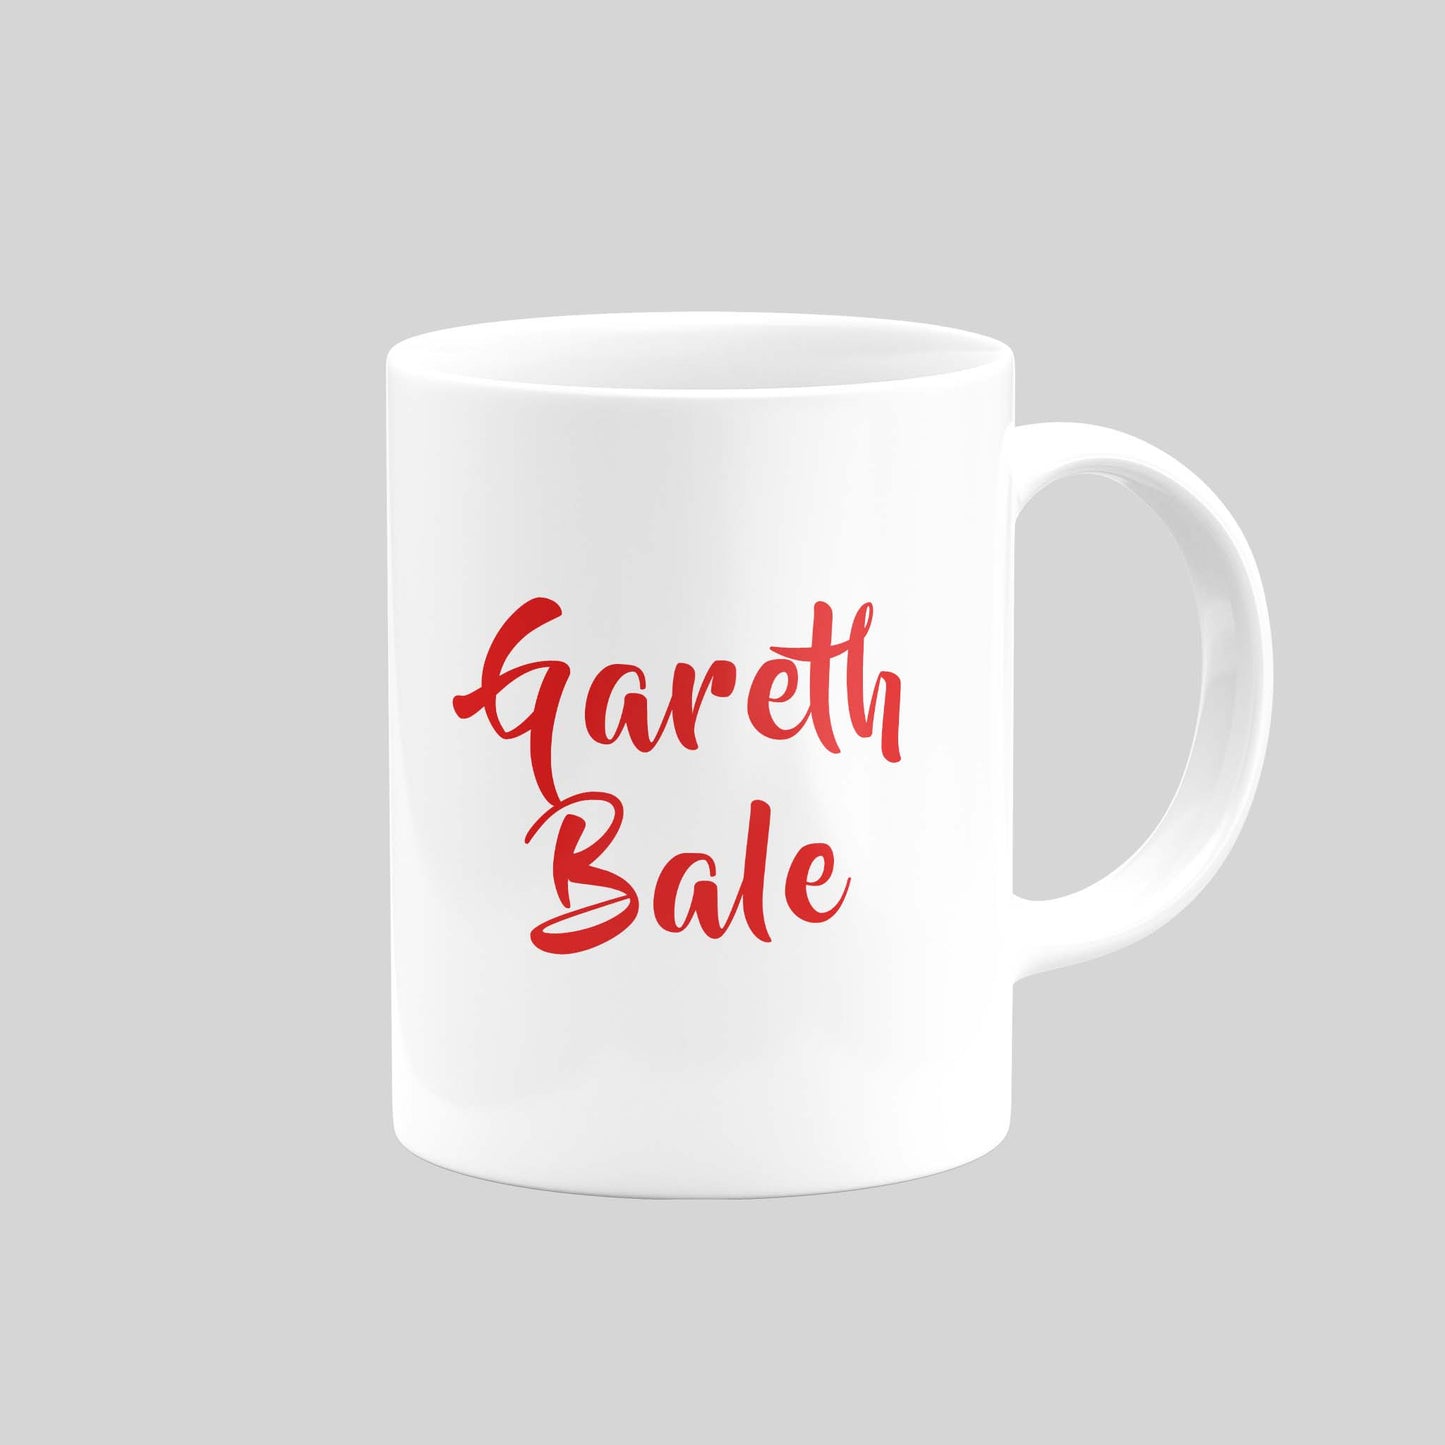 Gareth Bale Mug